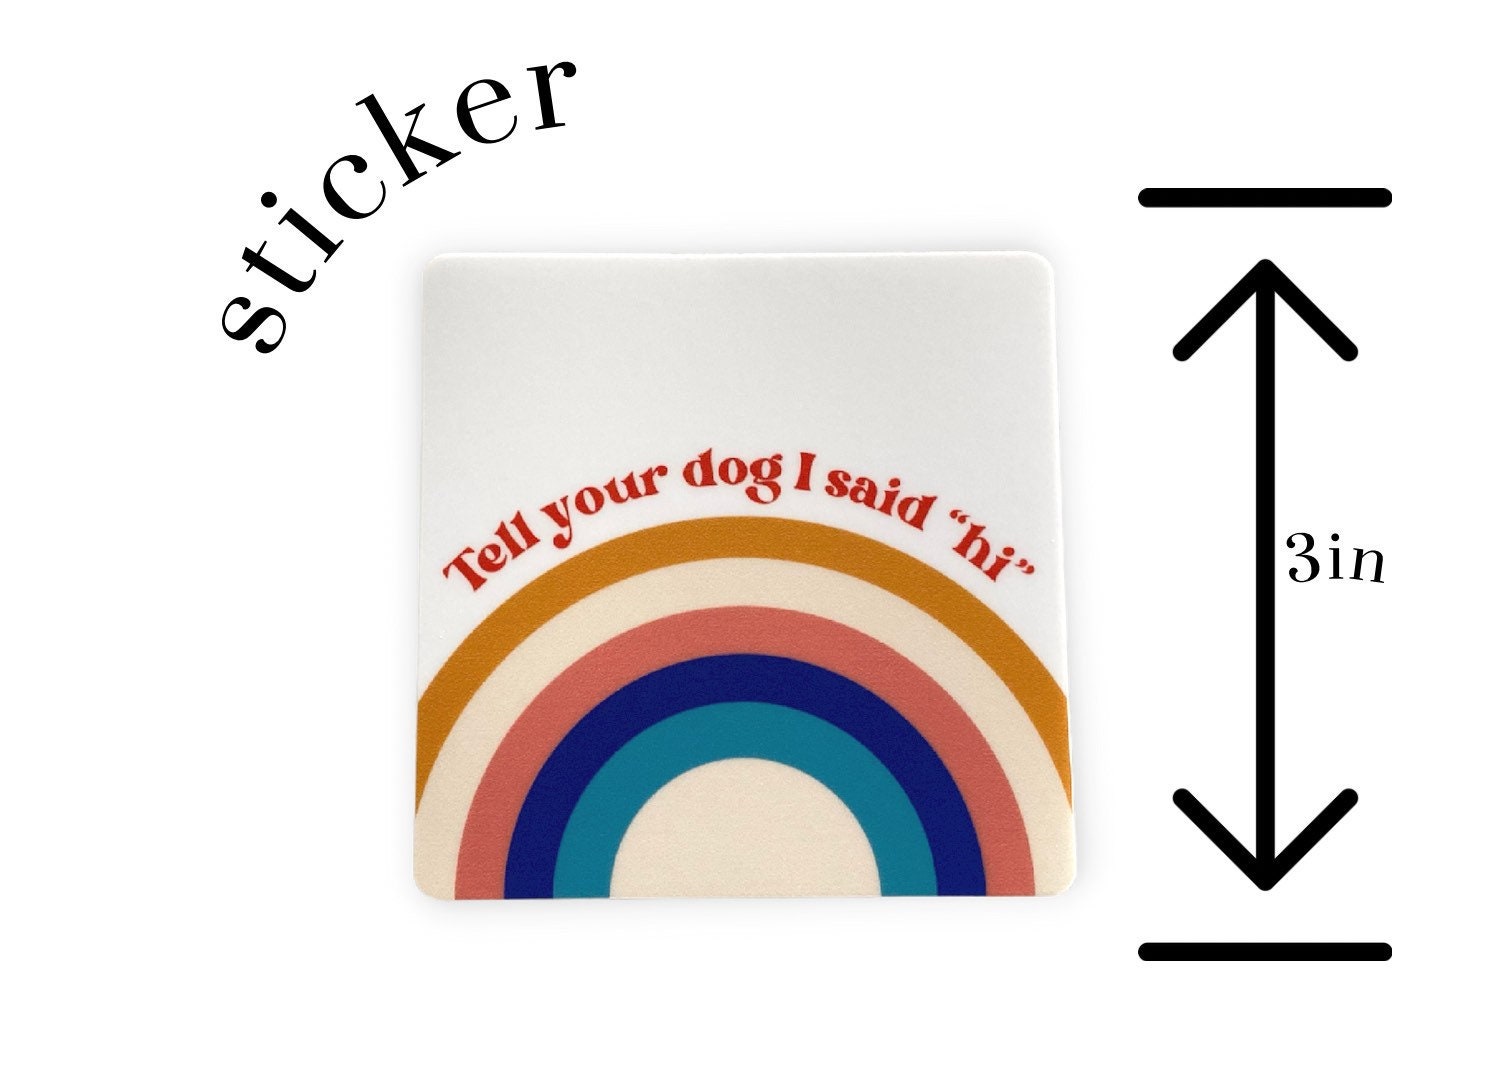 Tell Your Dog I Said Hi Sticker